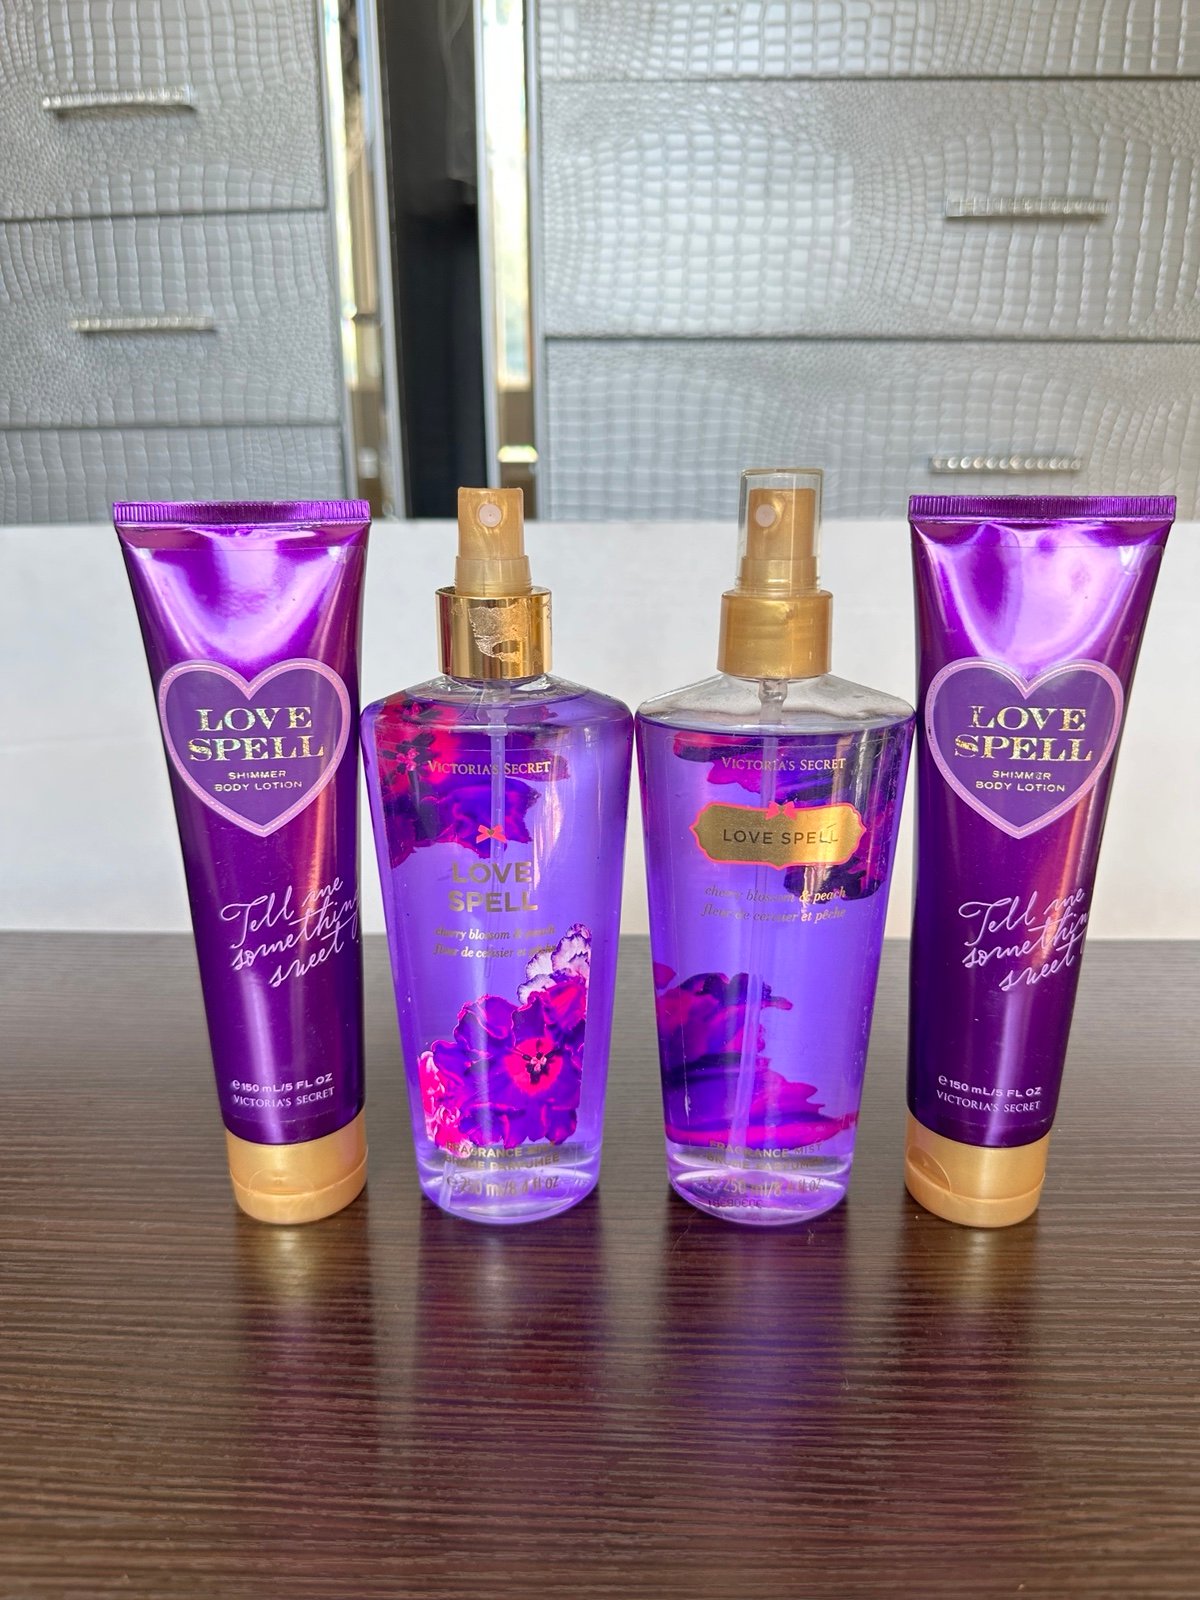 LOVE SPELL CLASSIC VS Victoria’s Secret mist spray shimmer lotion fragrance RARE 9meXMJ3Iu